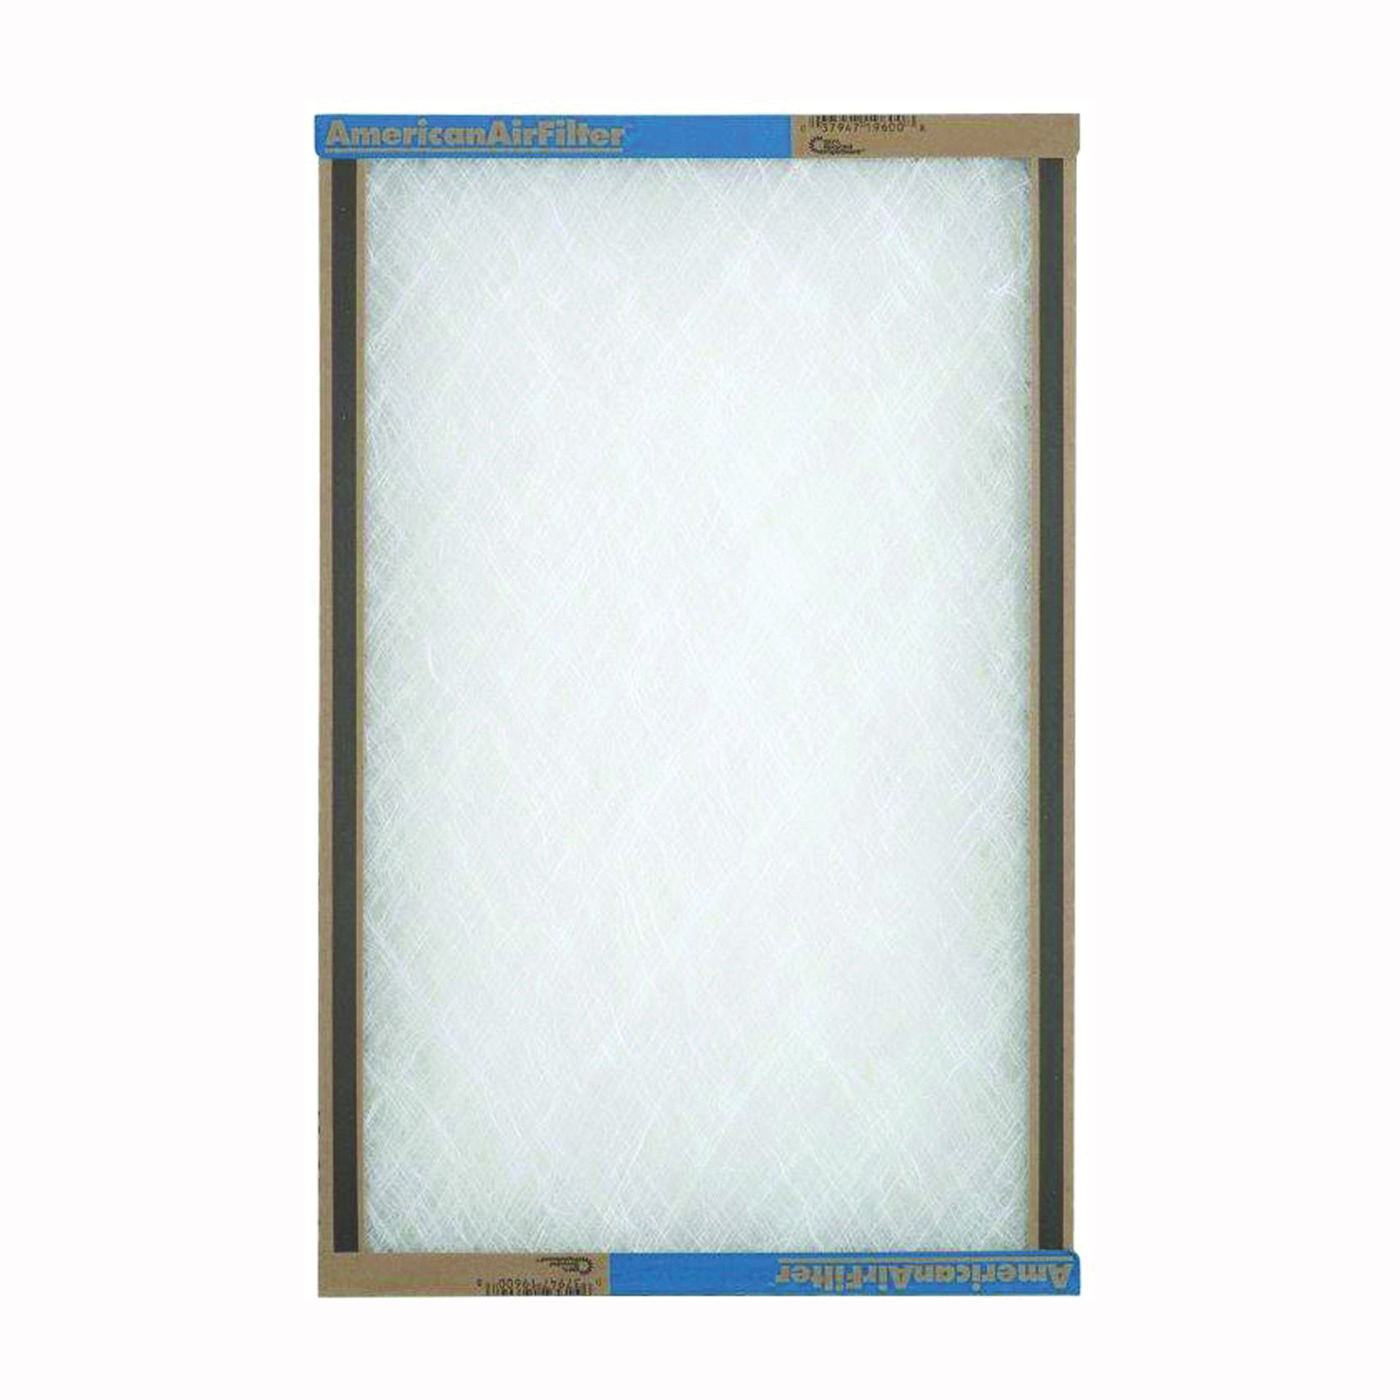 220-700-051 Panel Air Filter, 20 x 20 x 1, Chipboard Frame